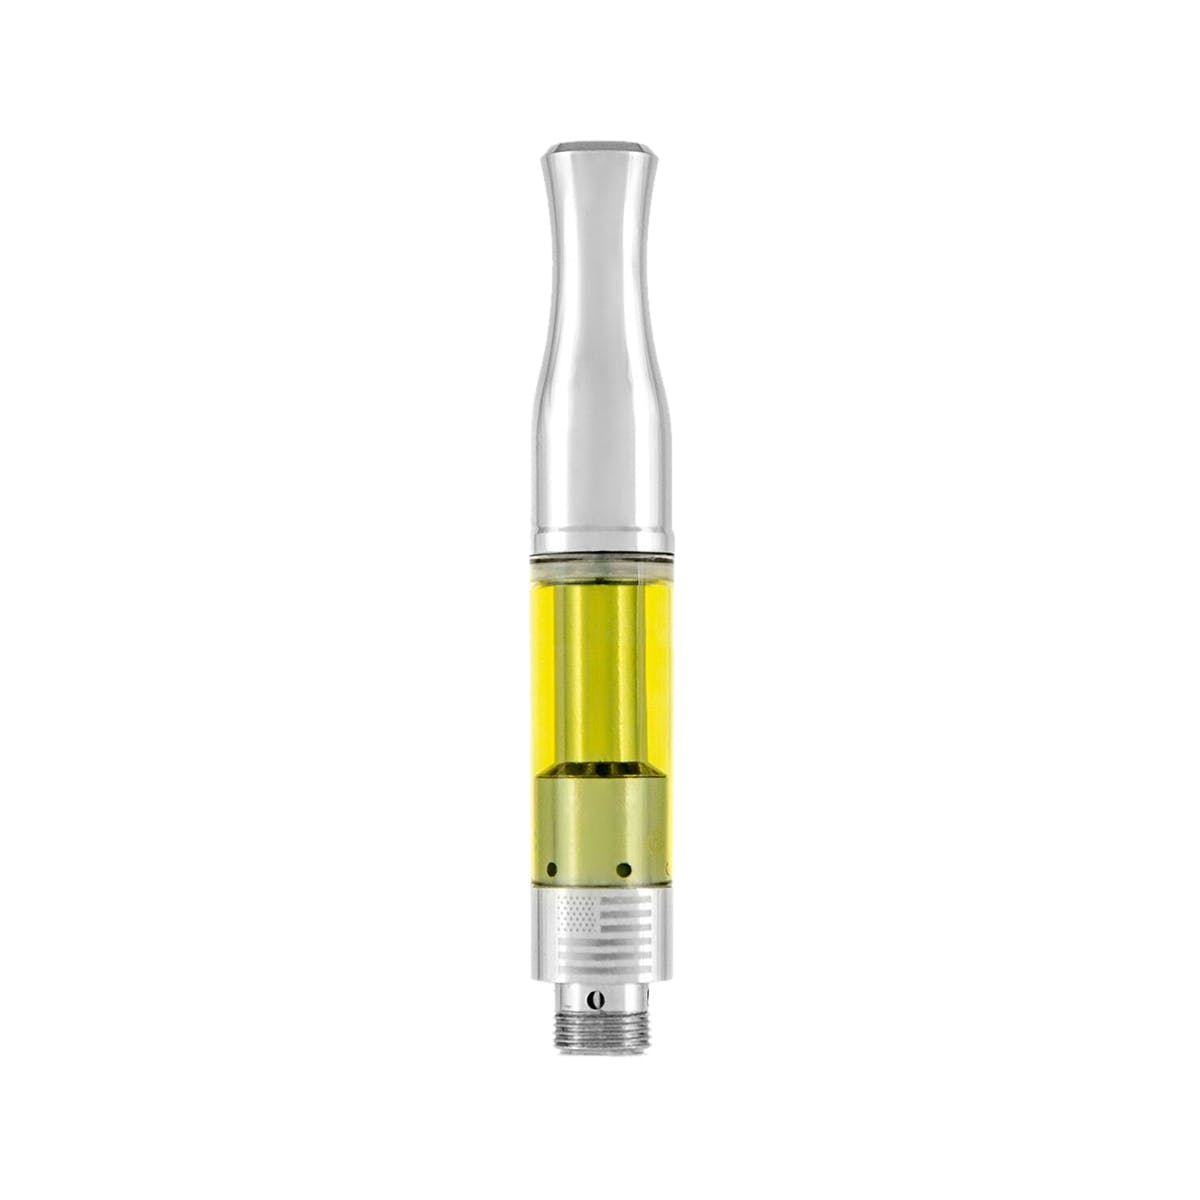 70/30 Indica Distillate C-cell Technology Vaporizer Cartridge